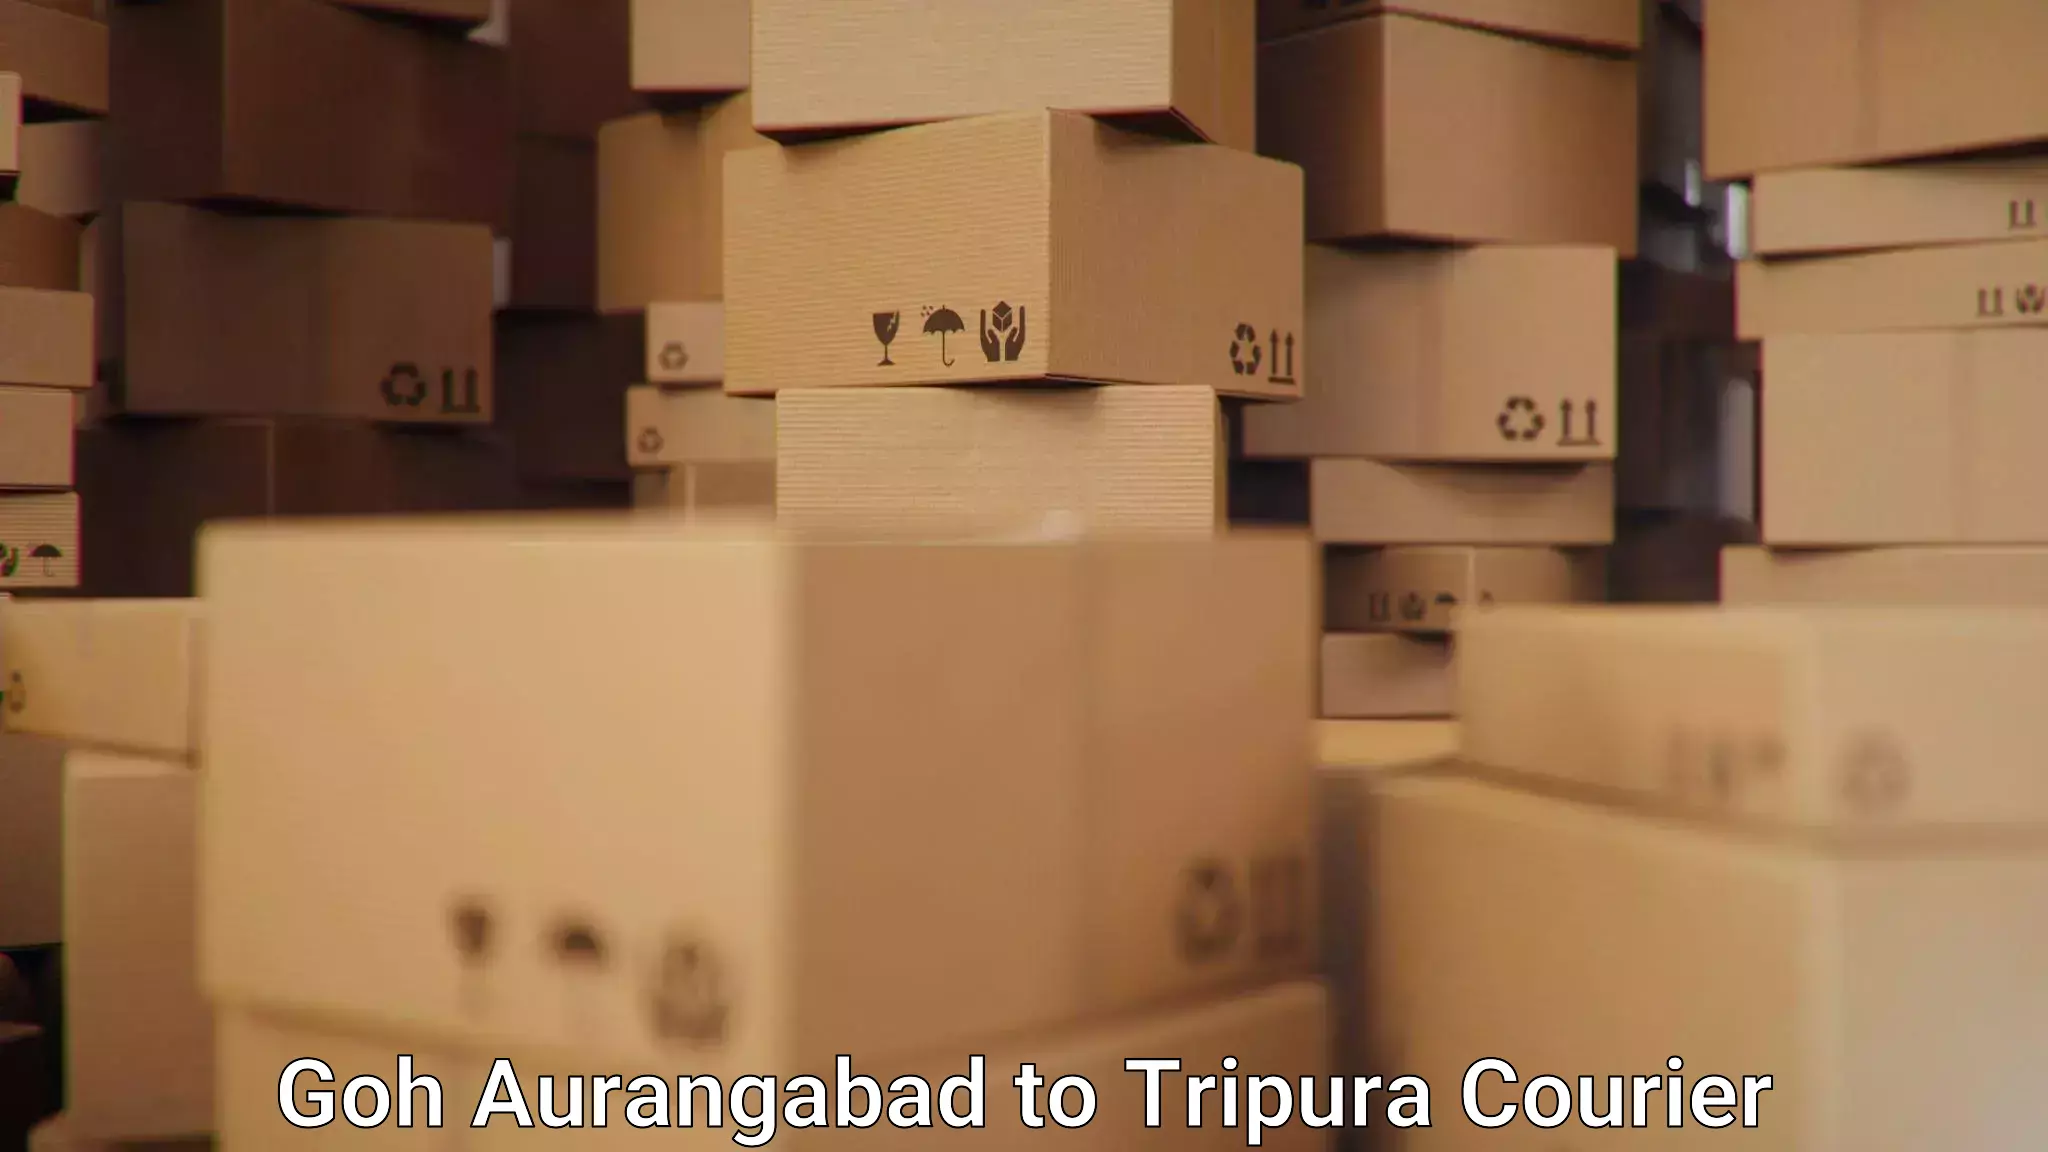 Courier service efficiency Goh Aurangabad to Tripura